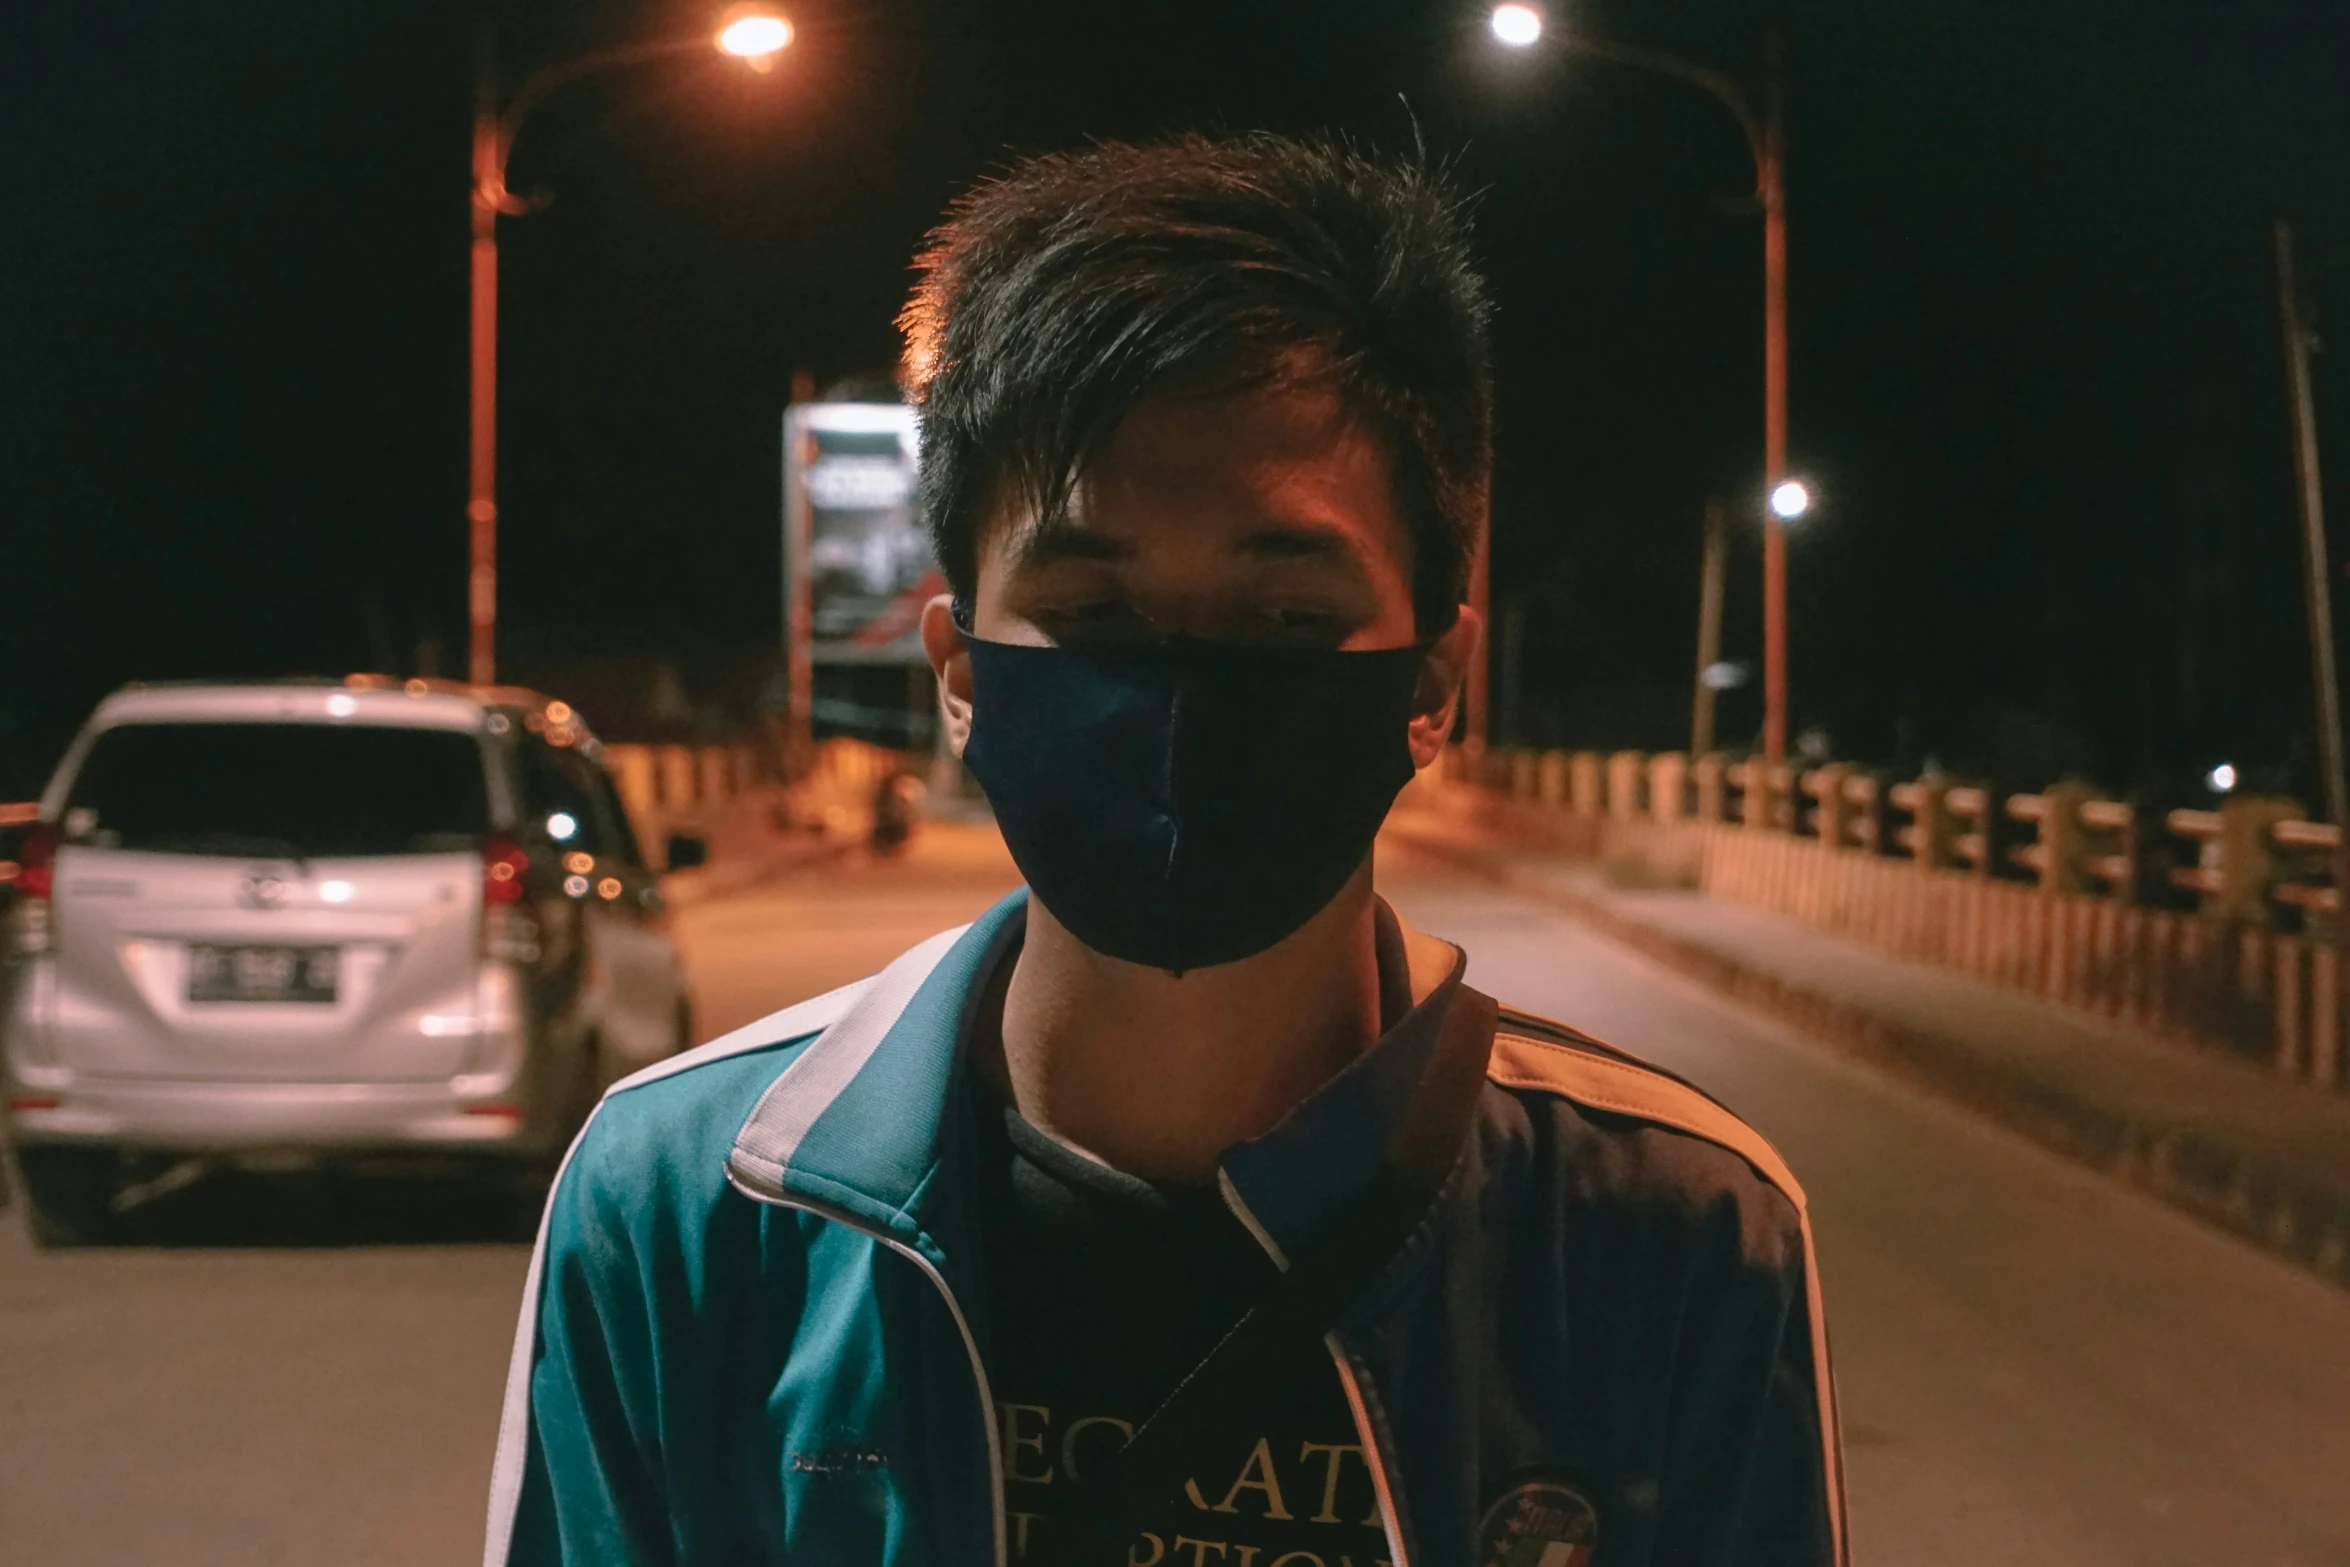 a guy wearing a black mask on a city street